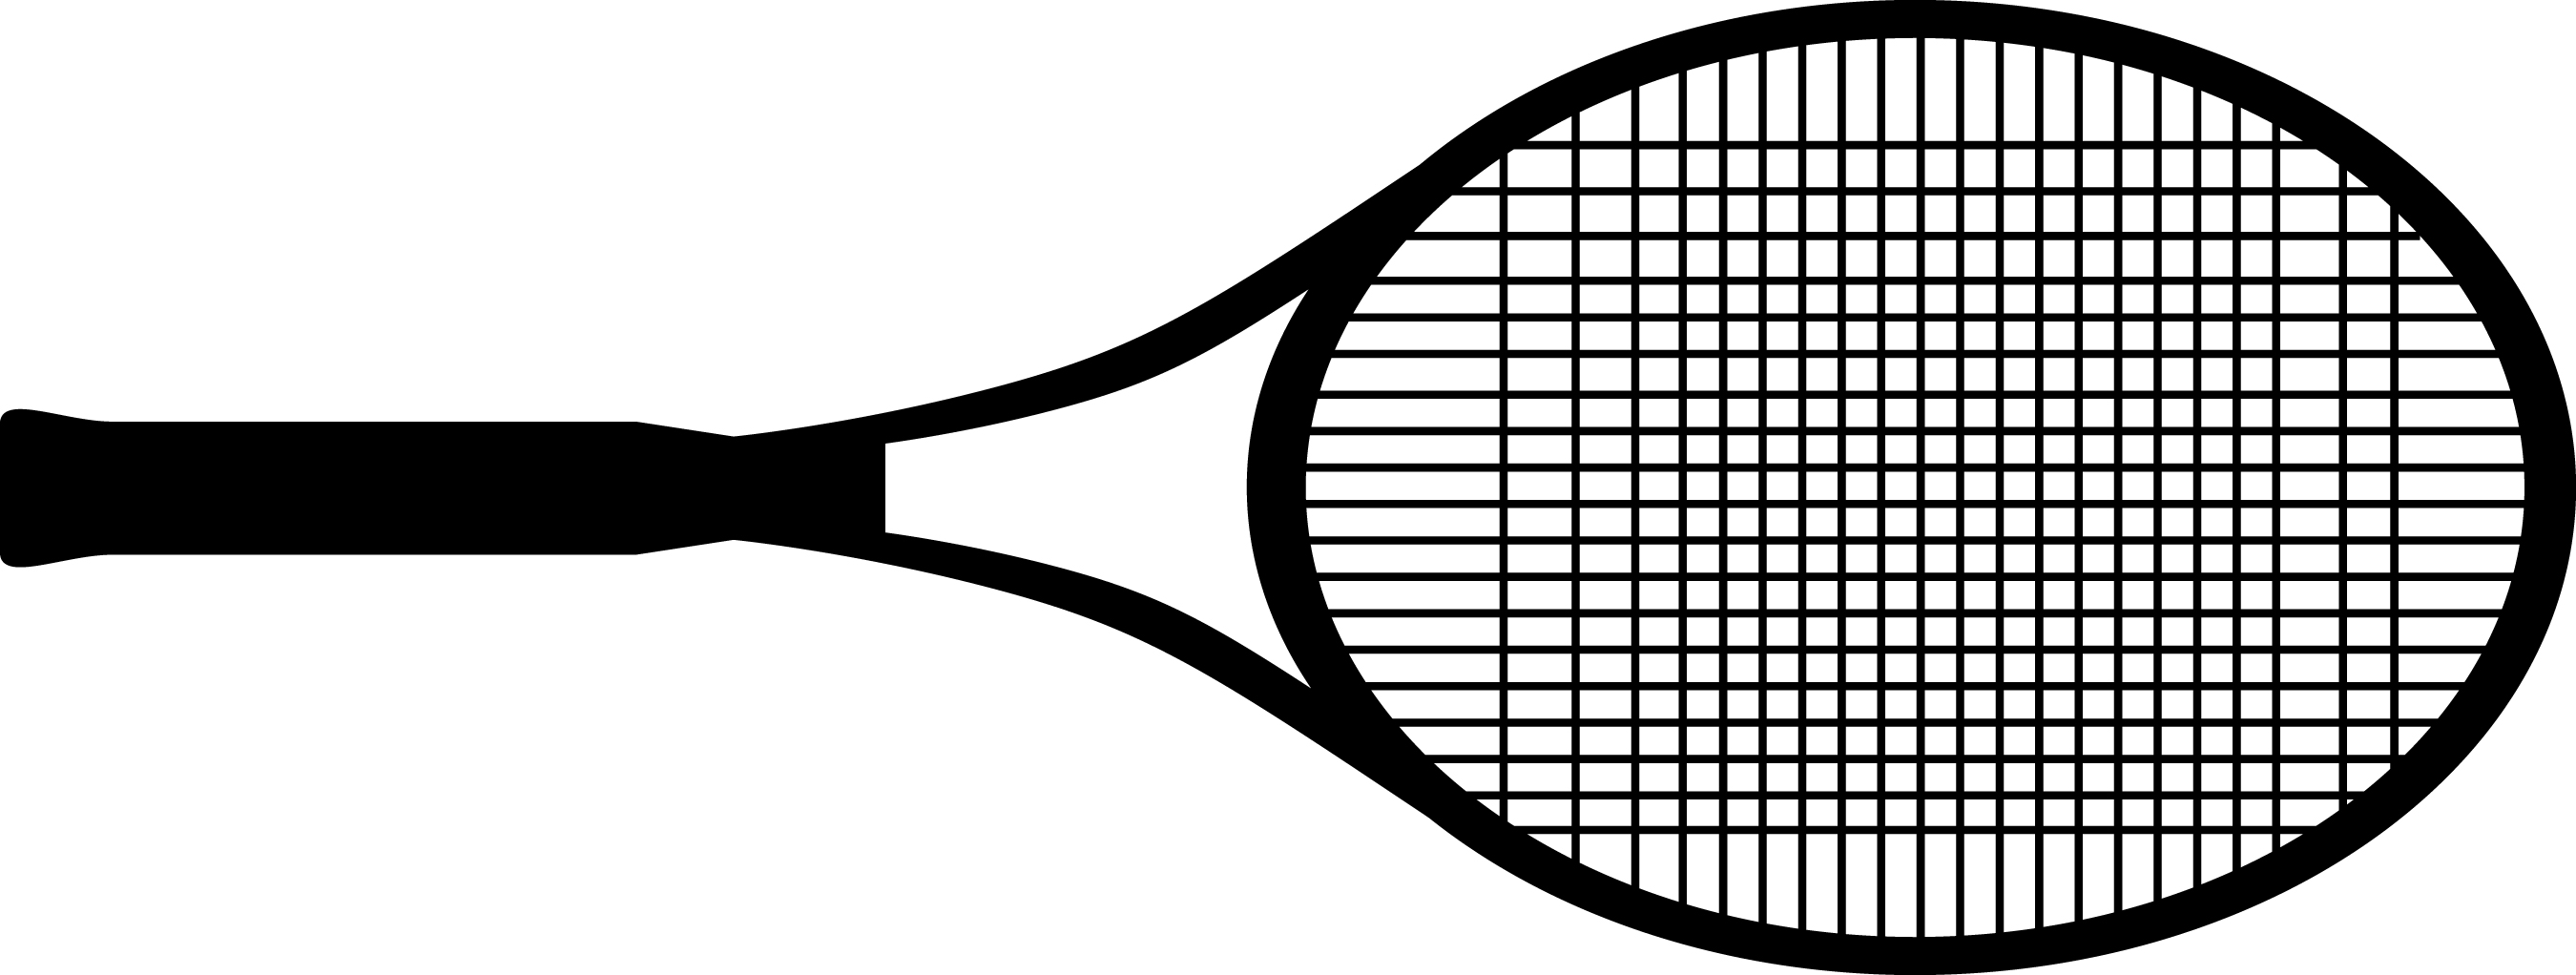 Horizontal Tennis Racquet Cli